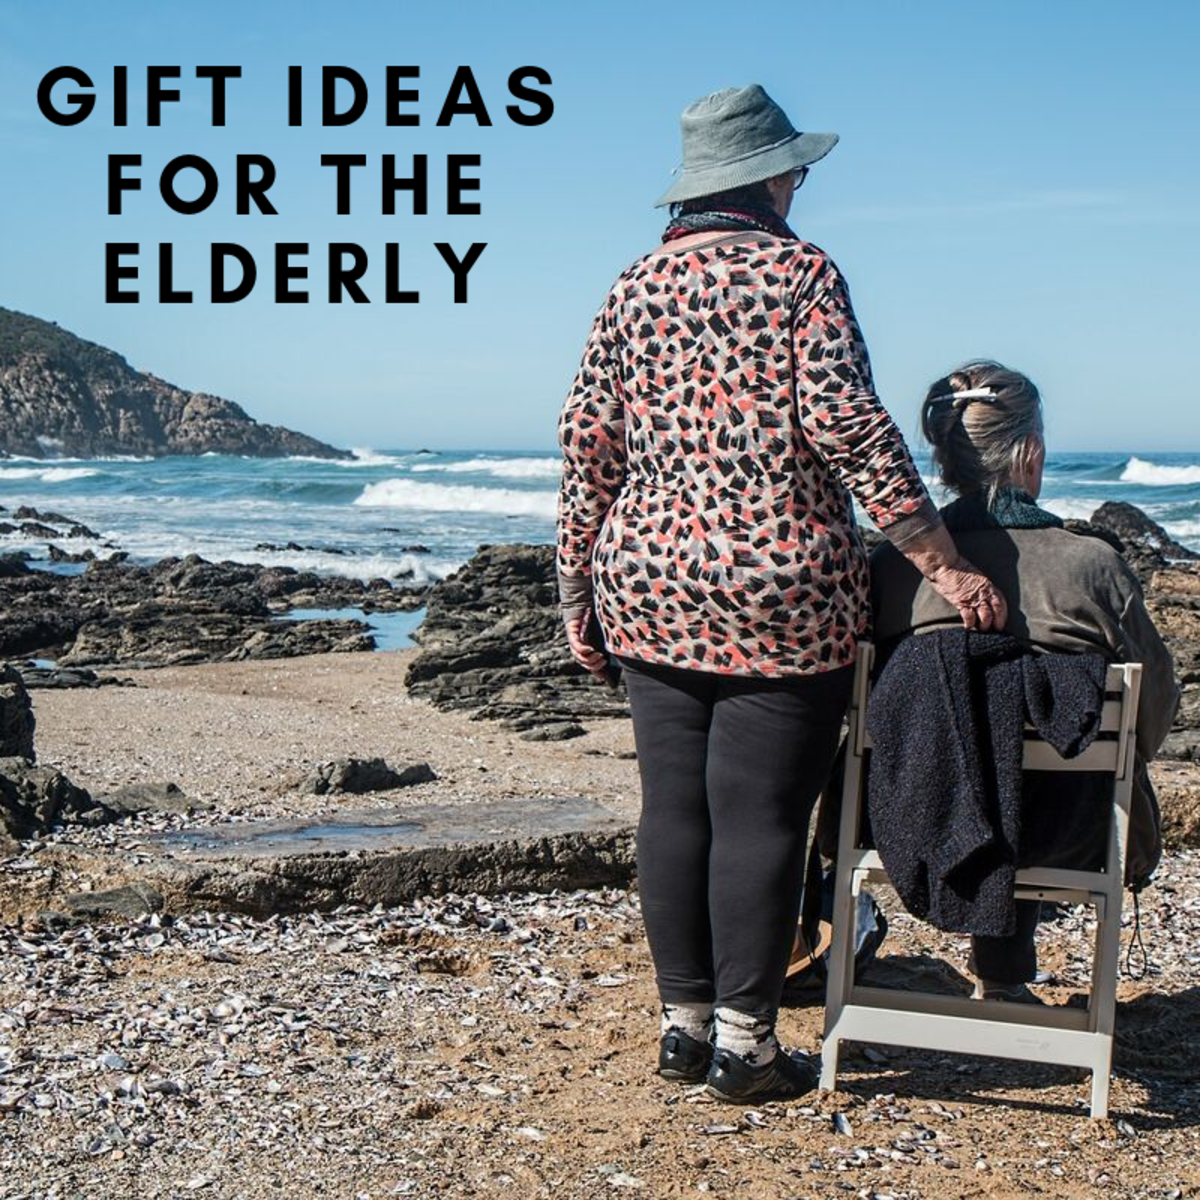 16 Best Gift Ideas For Senior Citizens And The Elderly